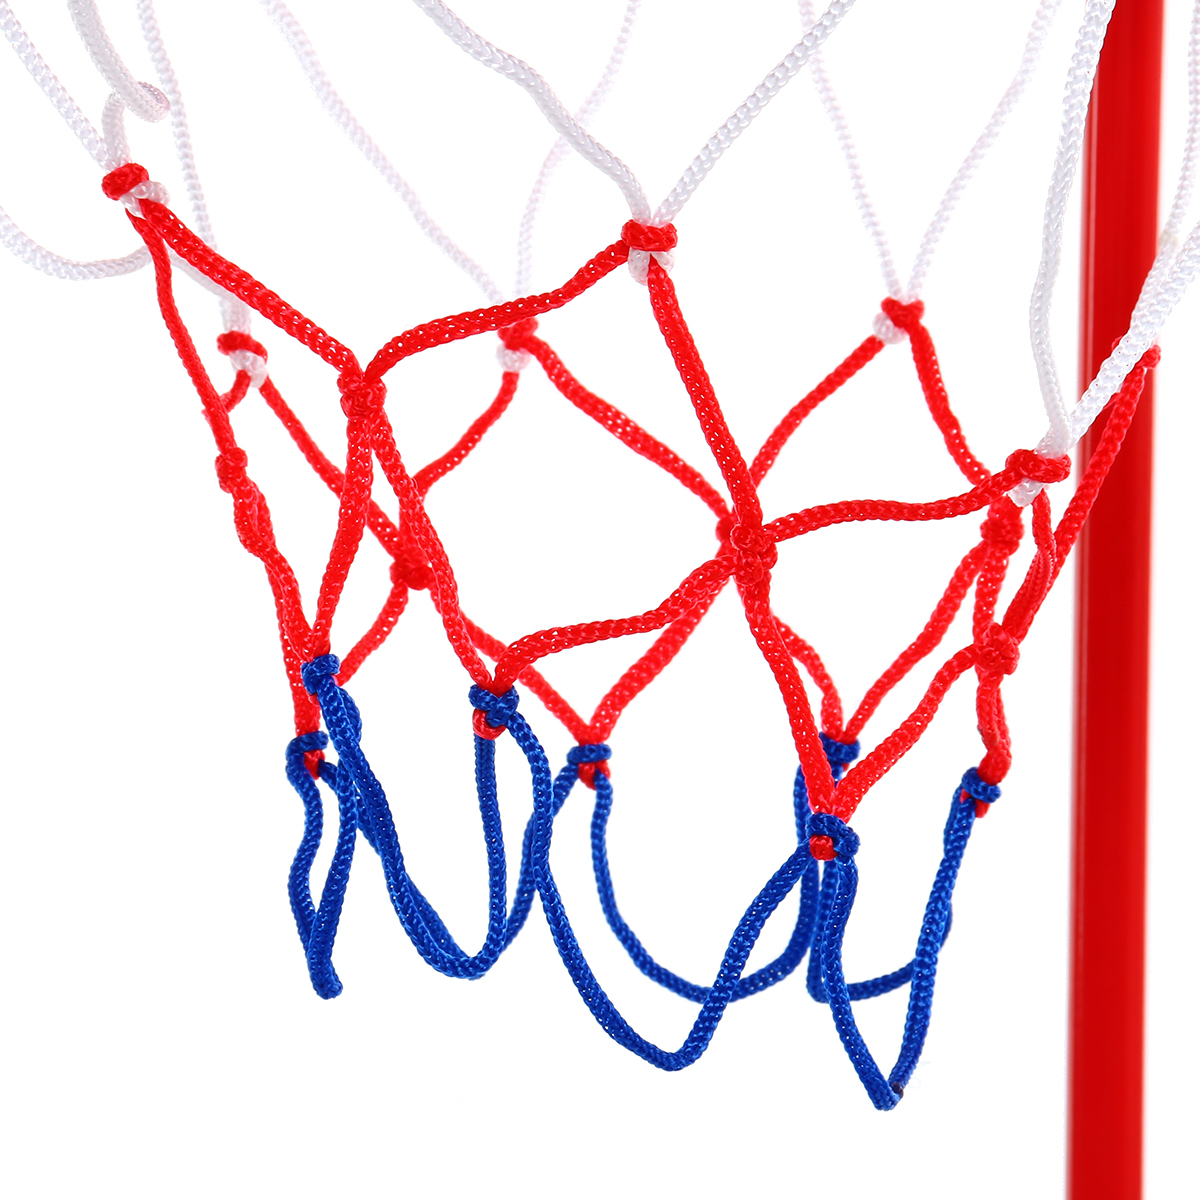 1.2/1.65m Basketball Stands Adjustable Children Basketball Hoop Net Set Kids Sport Training Practice Accessories